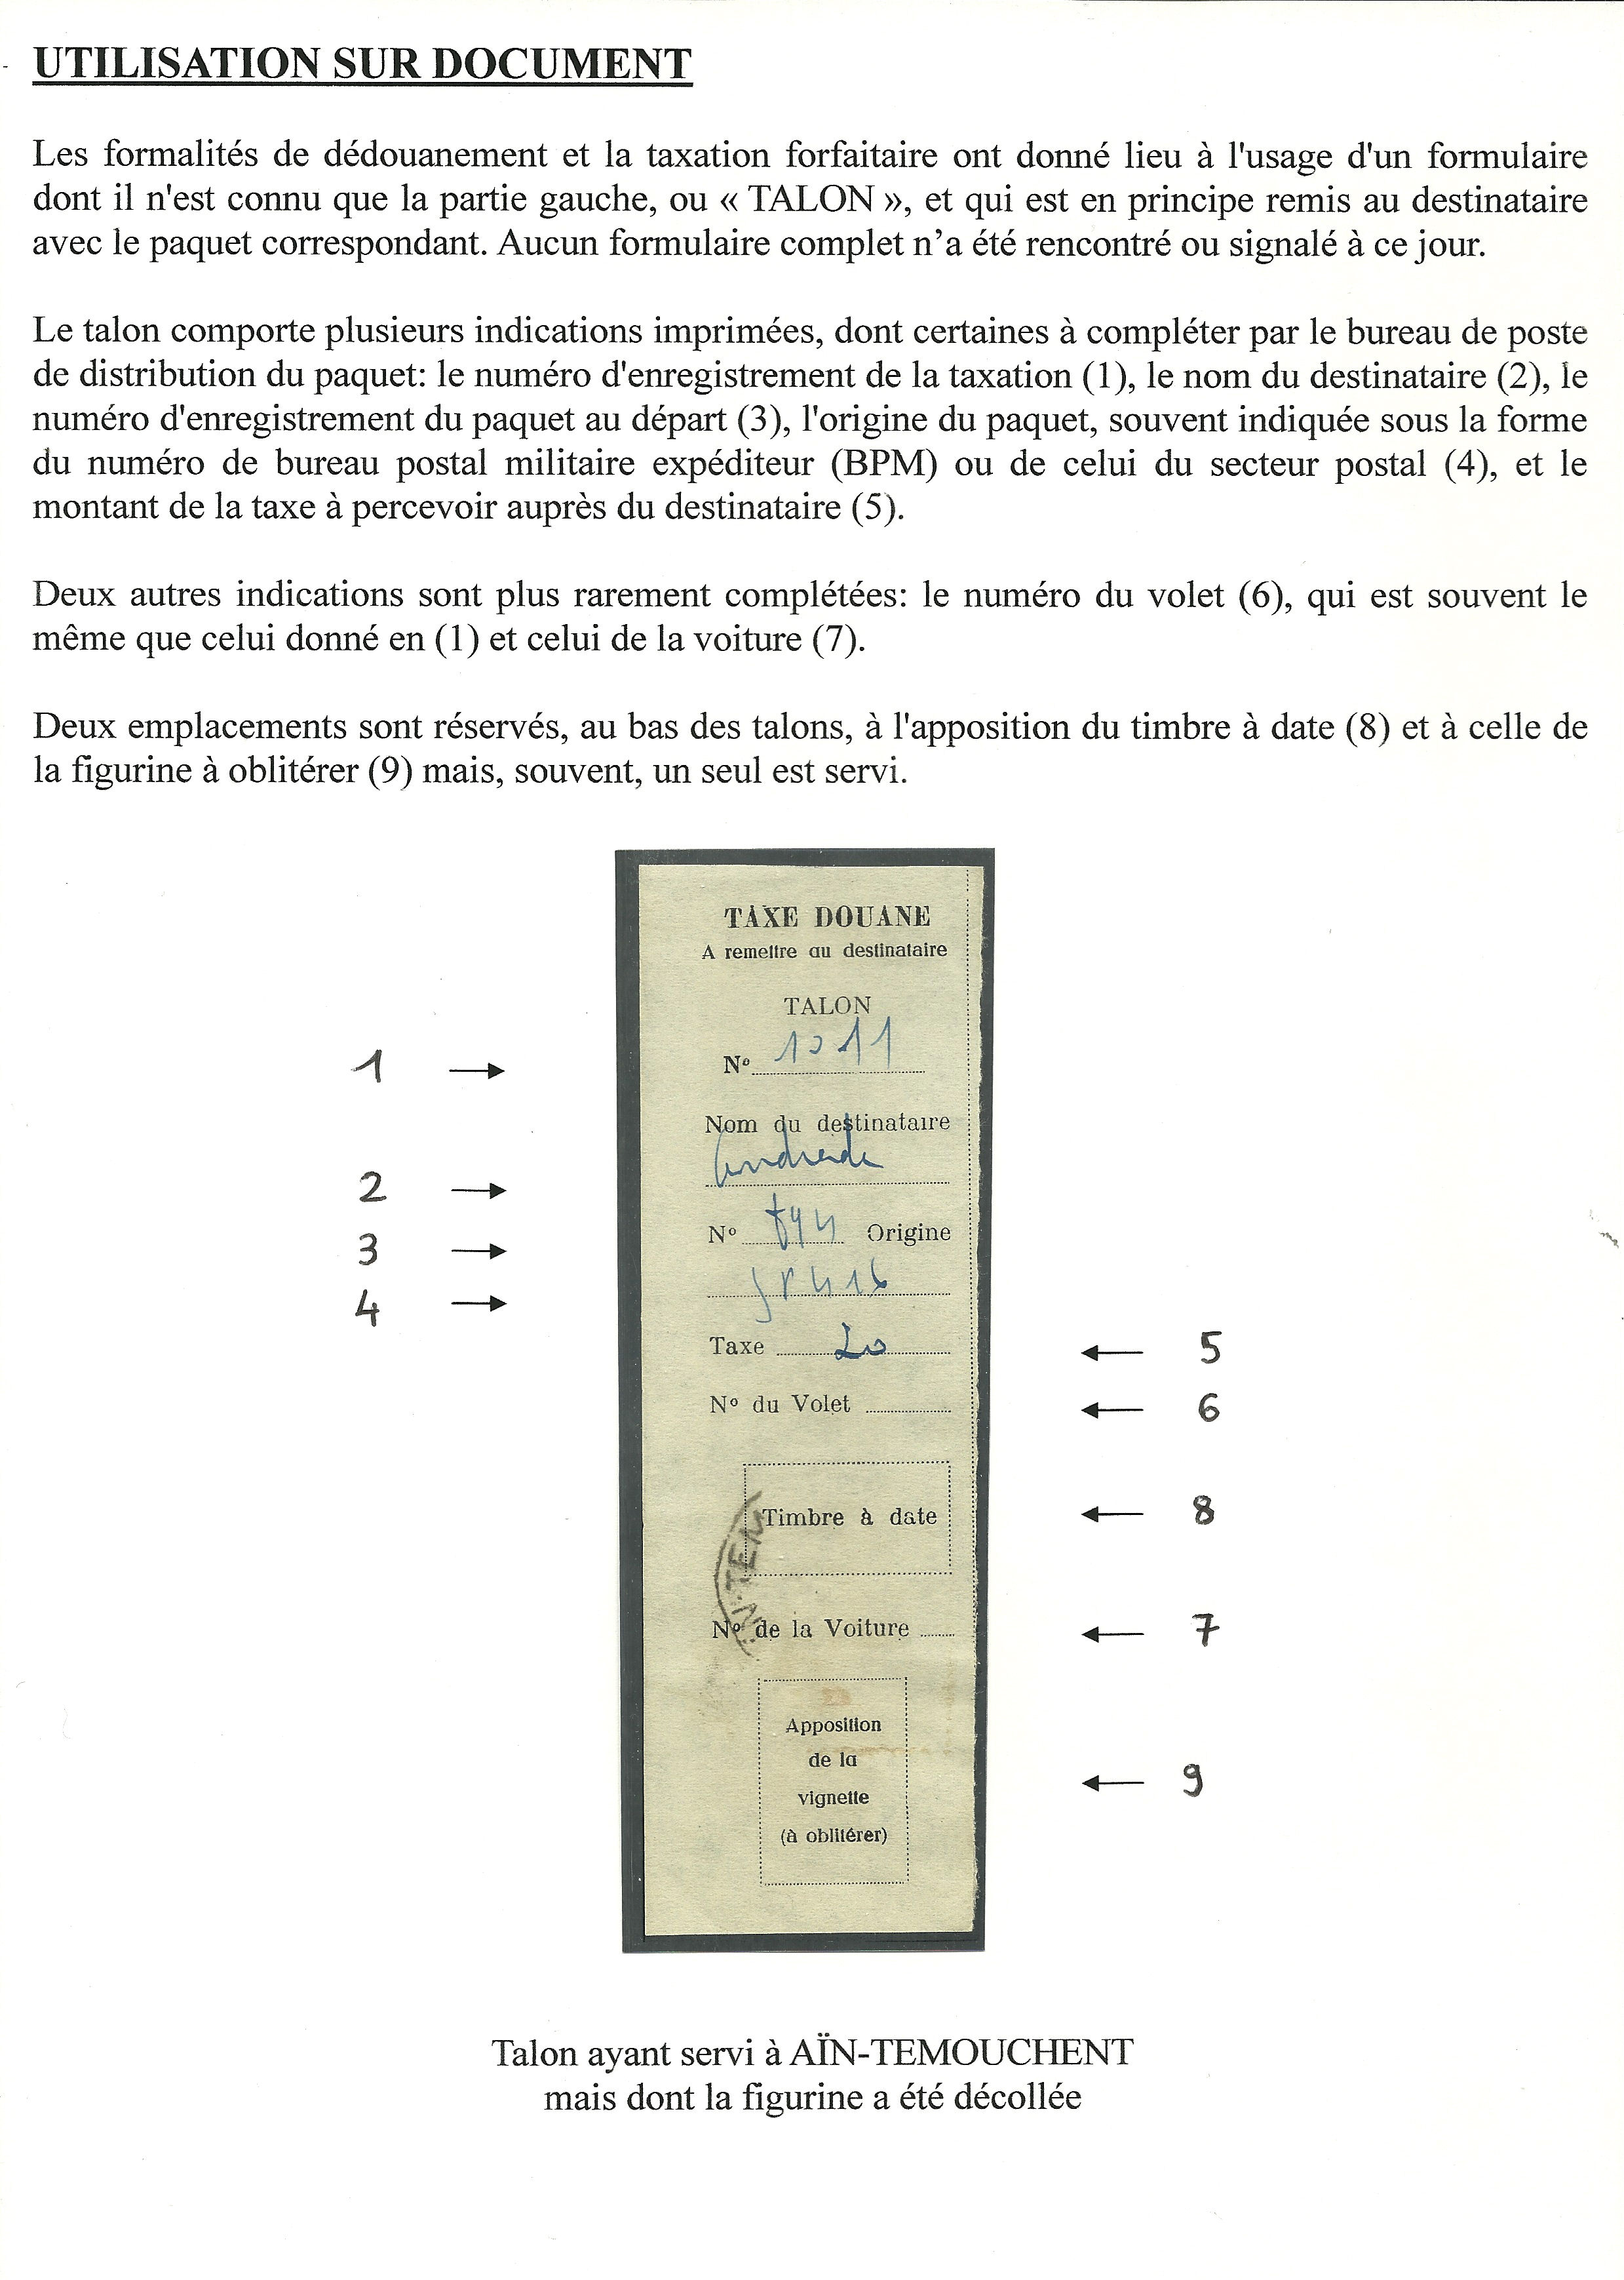 Taxe ���P.C.V Douane��� Alg��rie (1944 / 1945) p. 9